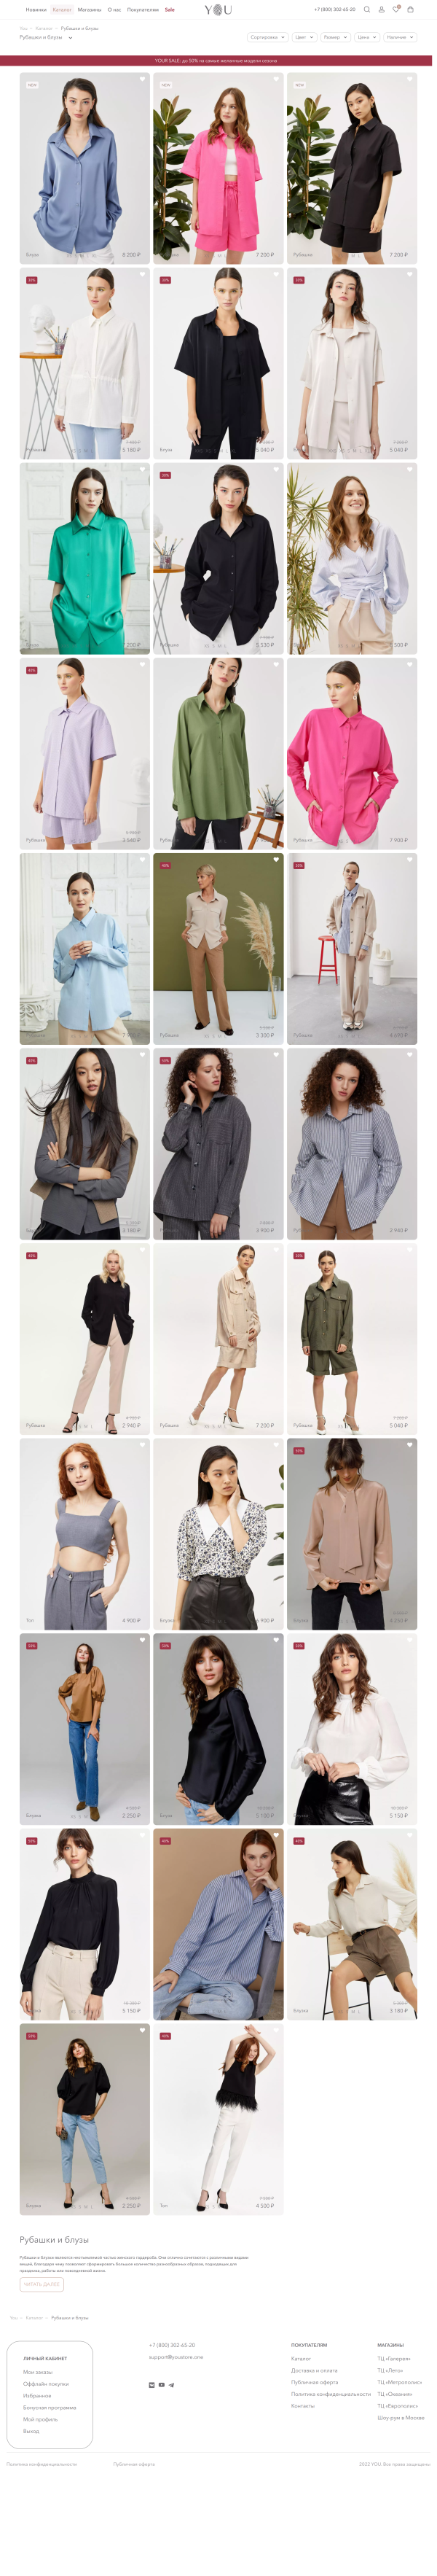 Desktop version of Women's clothing store YOU. Version 2020.